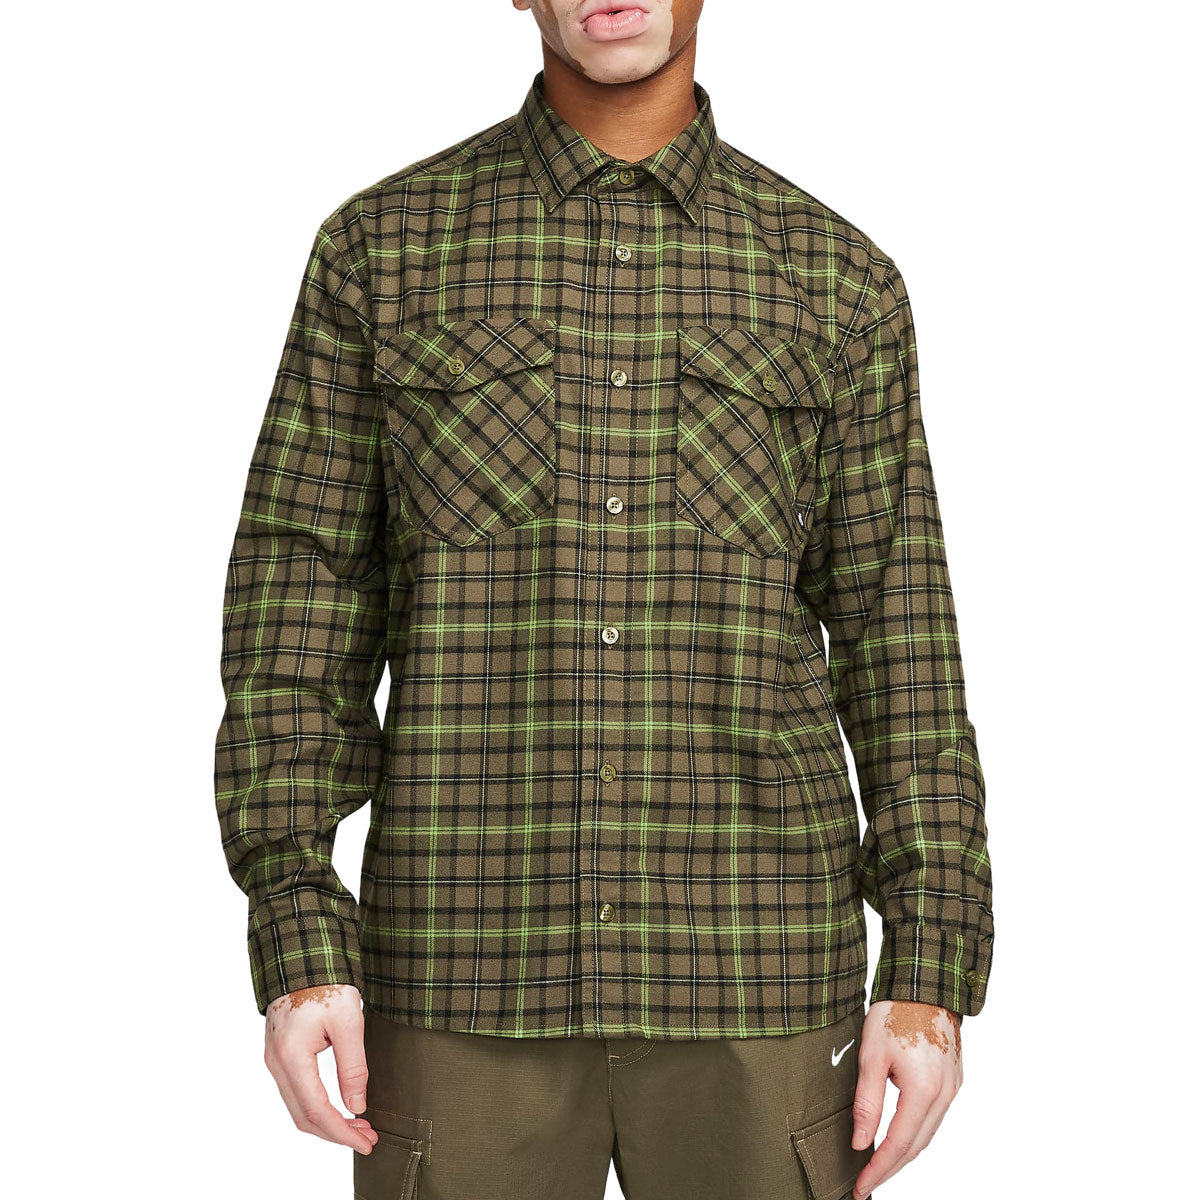 Nike SB Flannel Skate Button Up Shirt - Medium Olive/Cargo Khaki image 1